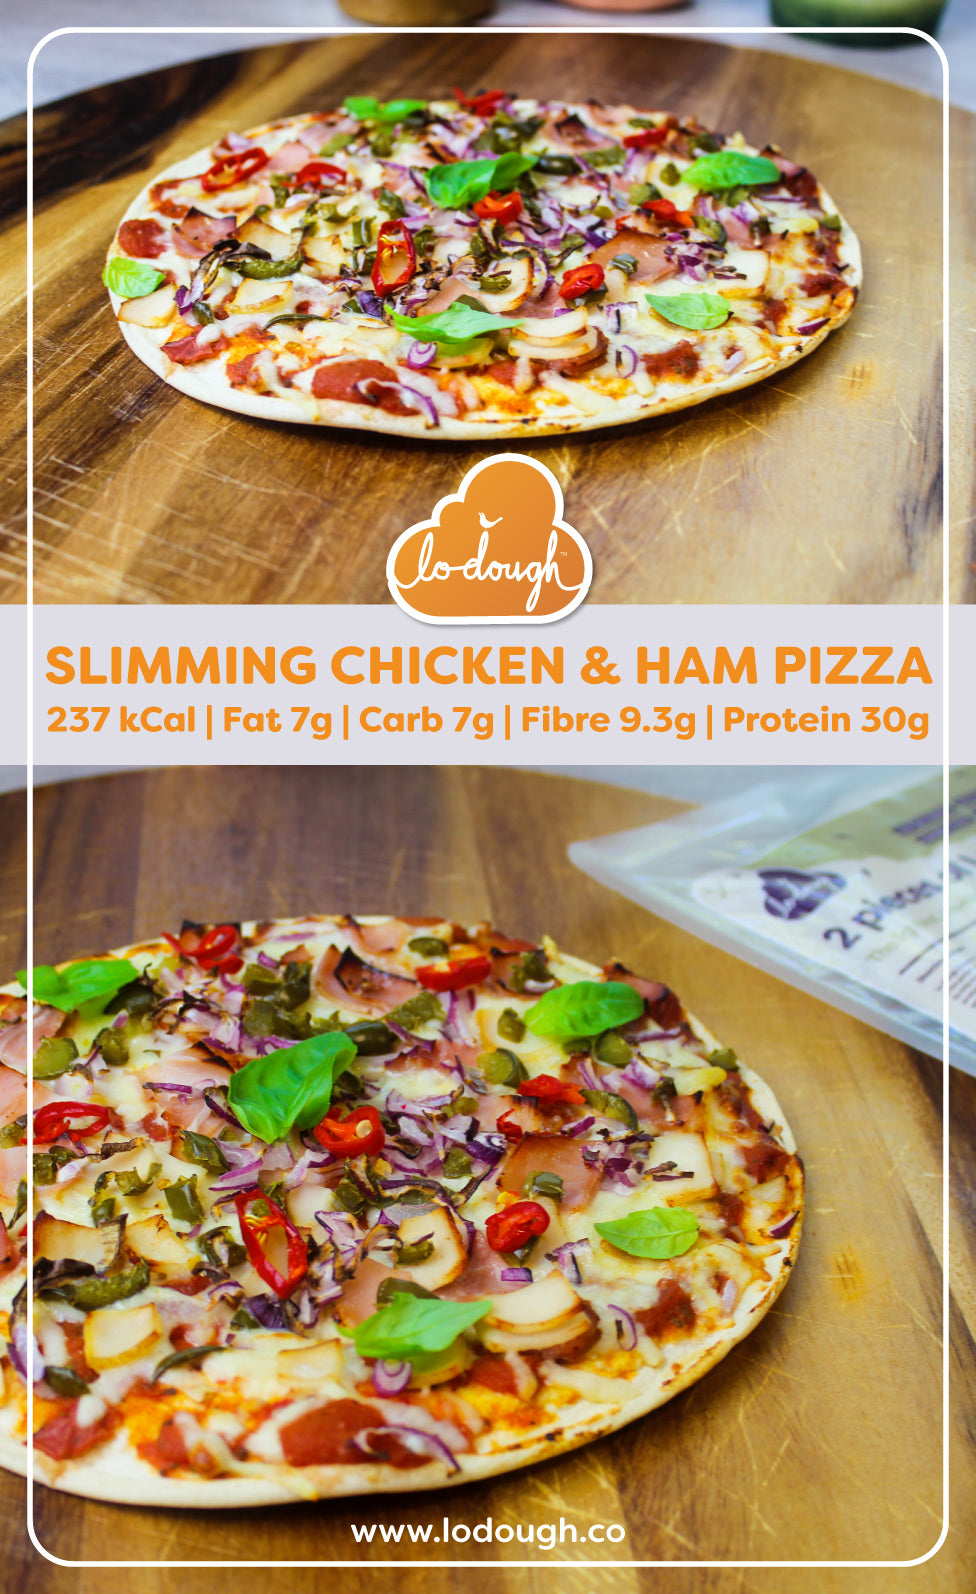 Slimmers Chicken and Ham Pizza